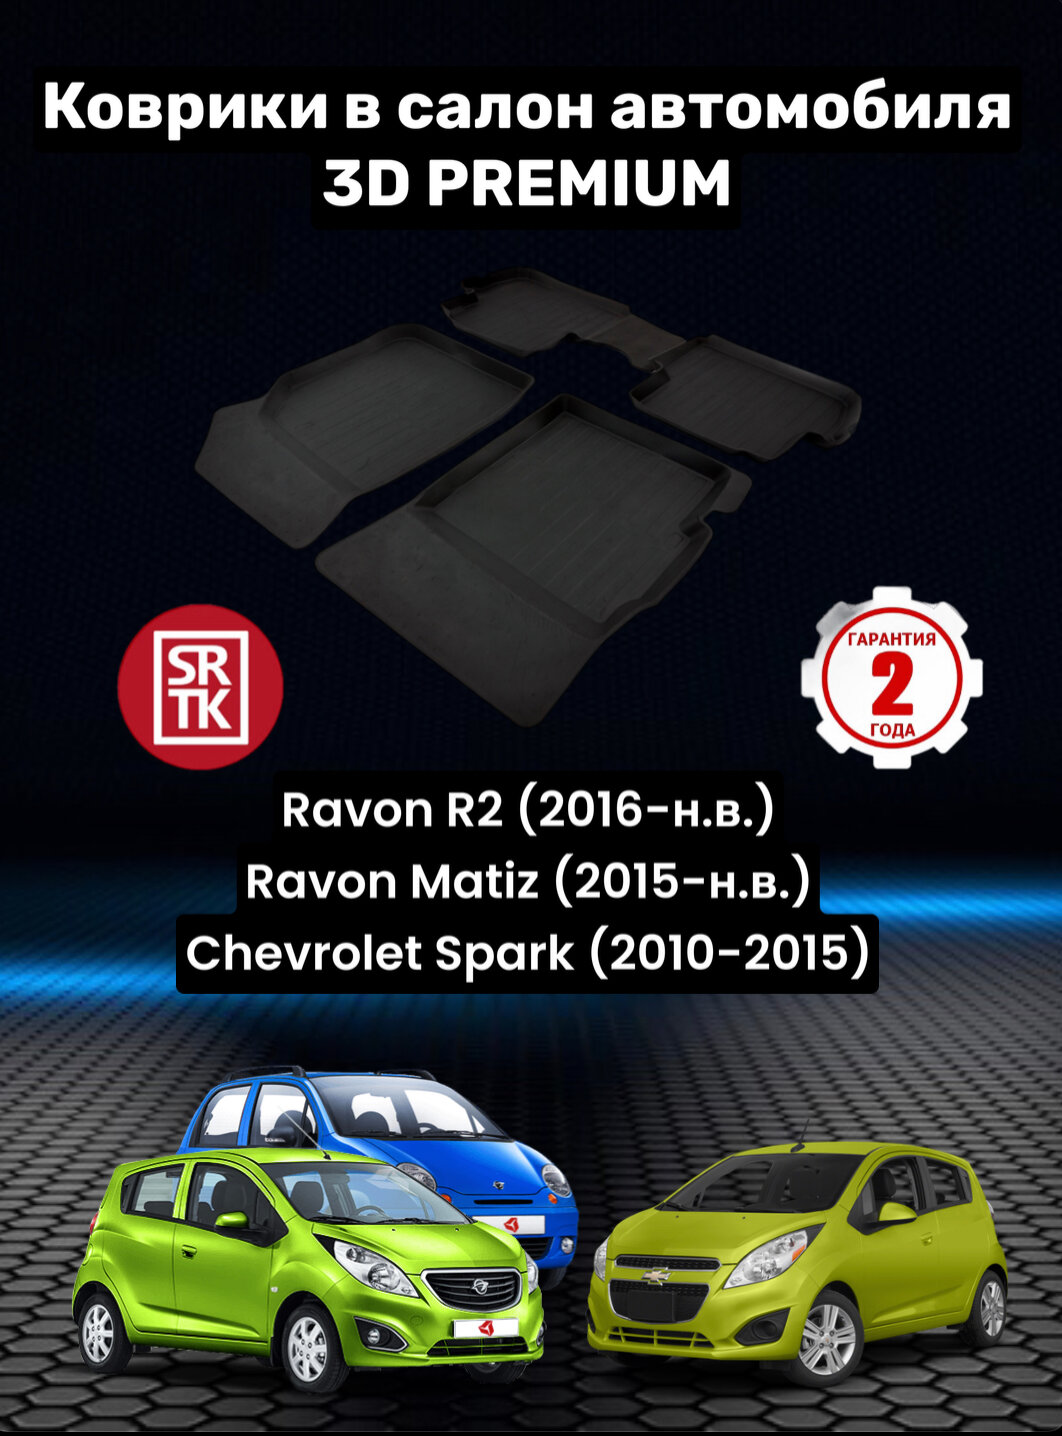 Коврики резиновые Шевроле Спарк/Равон Матиз/Р2/Chevrolet Spark (2010-15)/ Ravon Matiz/R2 (2015-) 3D PREMIUM SRTK комплект в салон